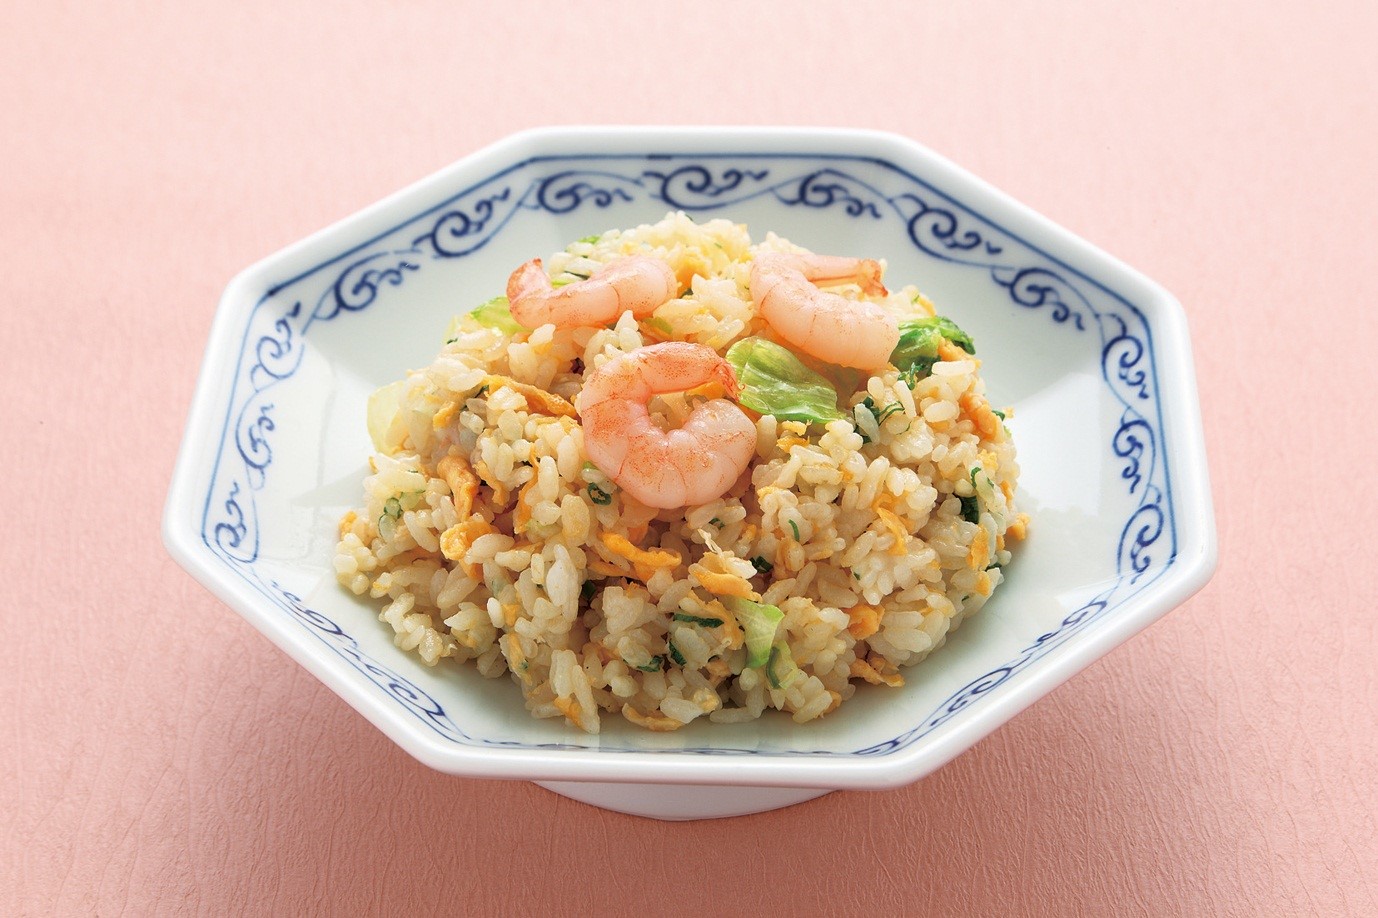 Shrimp Fried Rice recipe added!